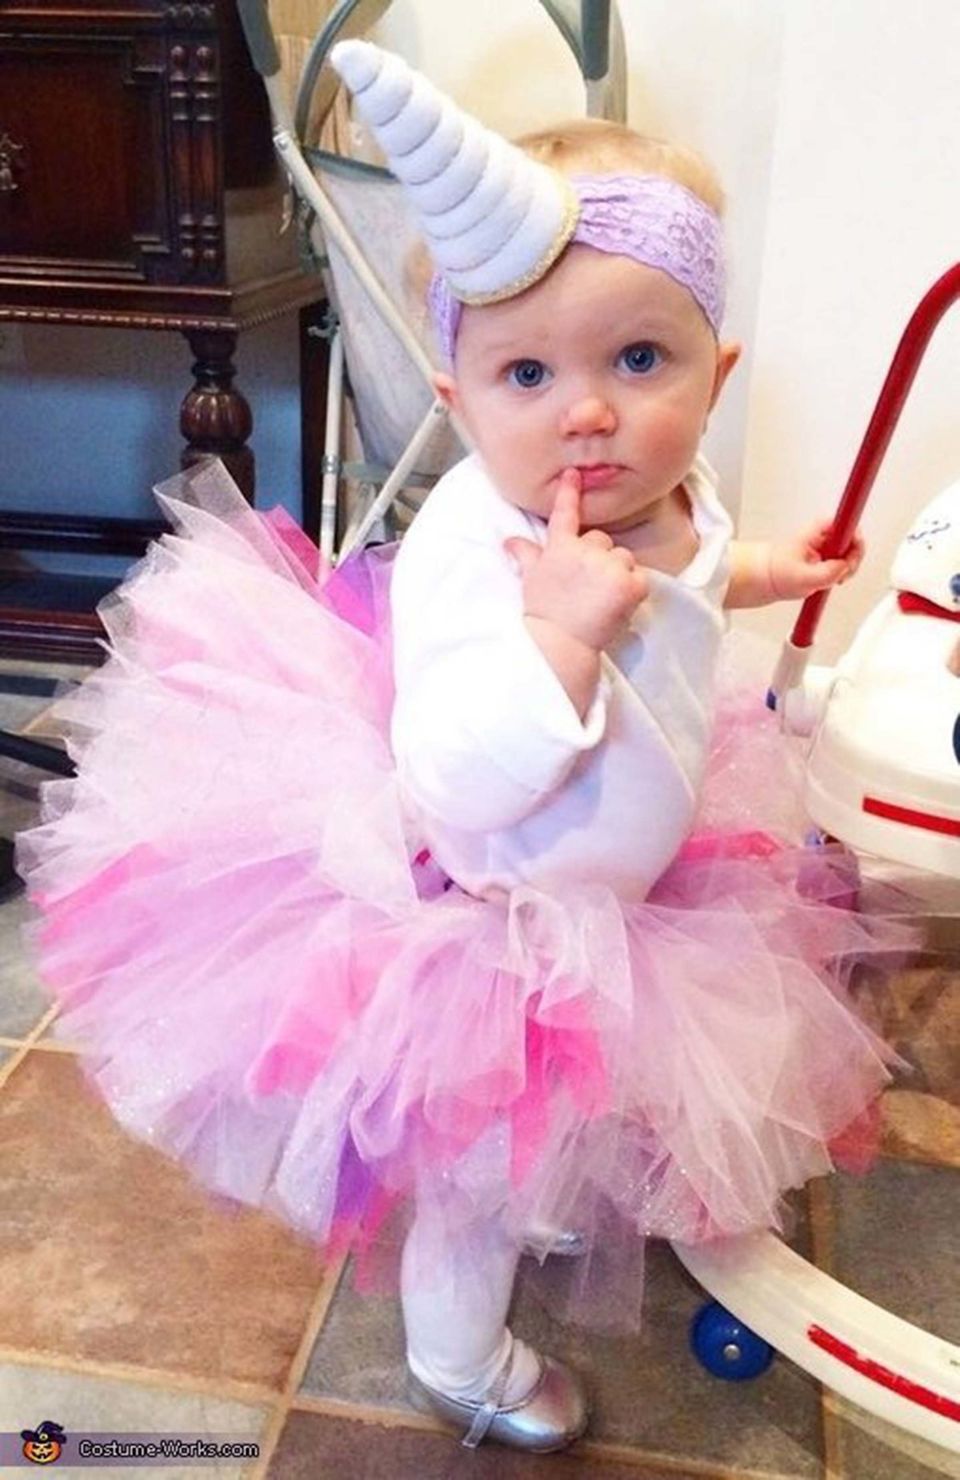 Baby Halloween Costumes Every Human Needs To See | HuffPost Life